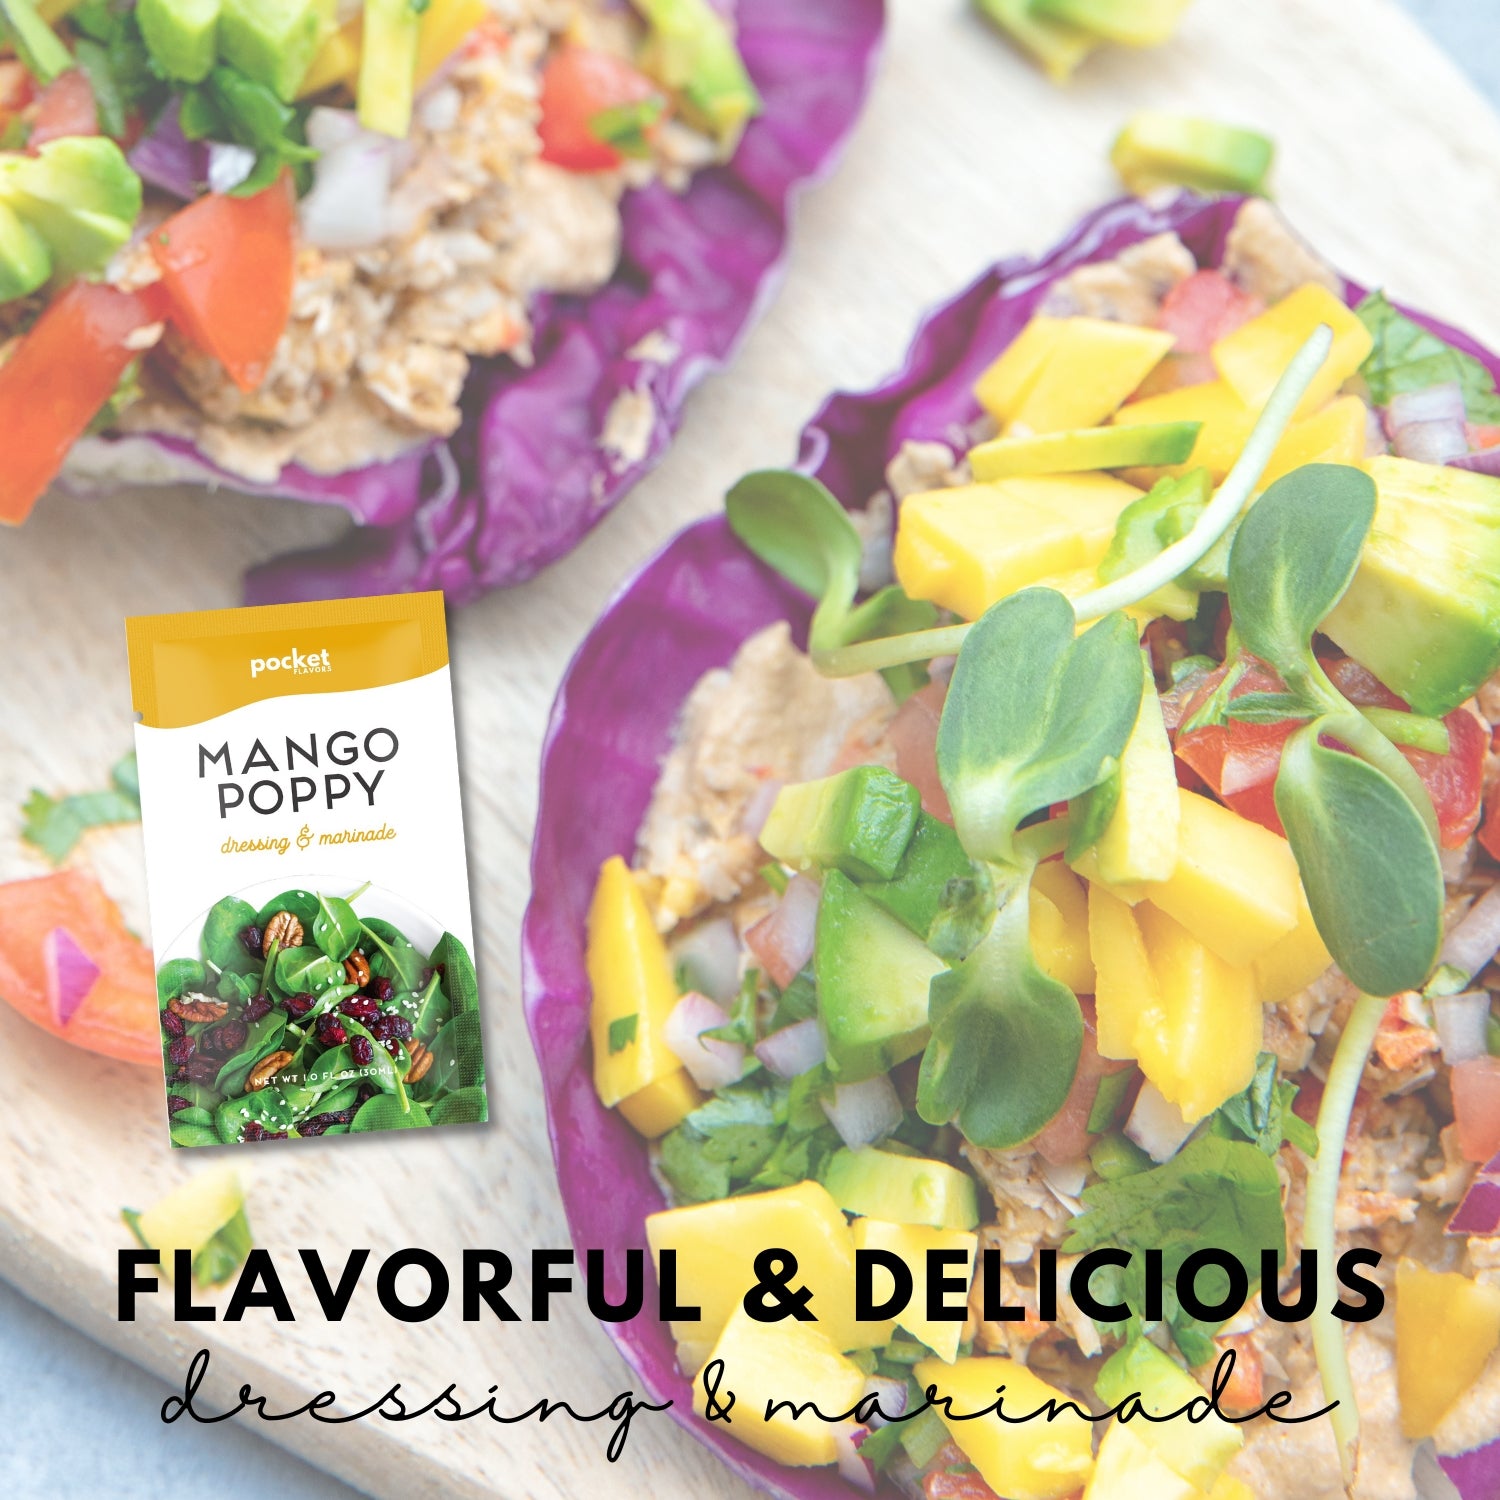 Single serve mango poppy salad dressing packet next to mango and cabbage dish.